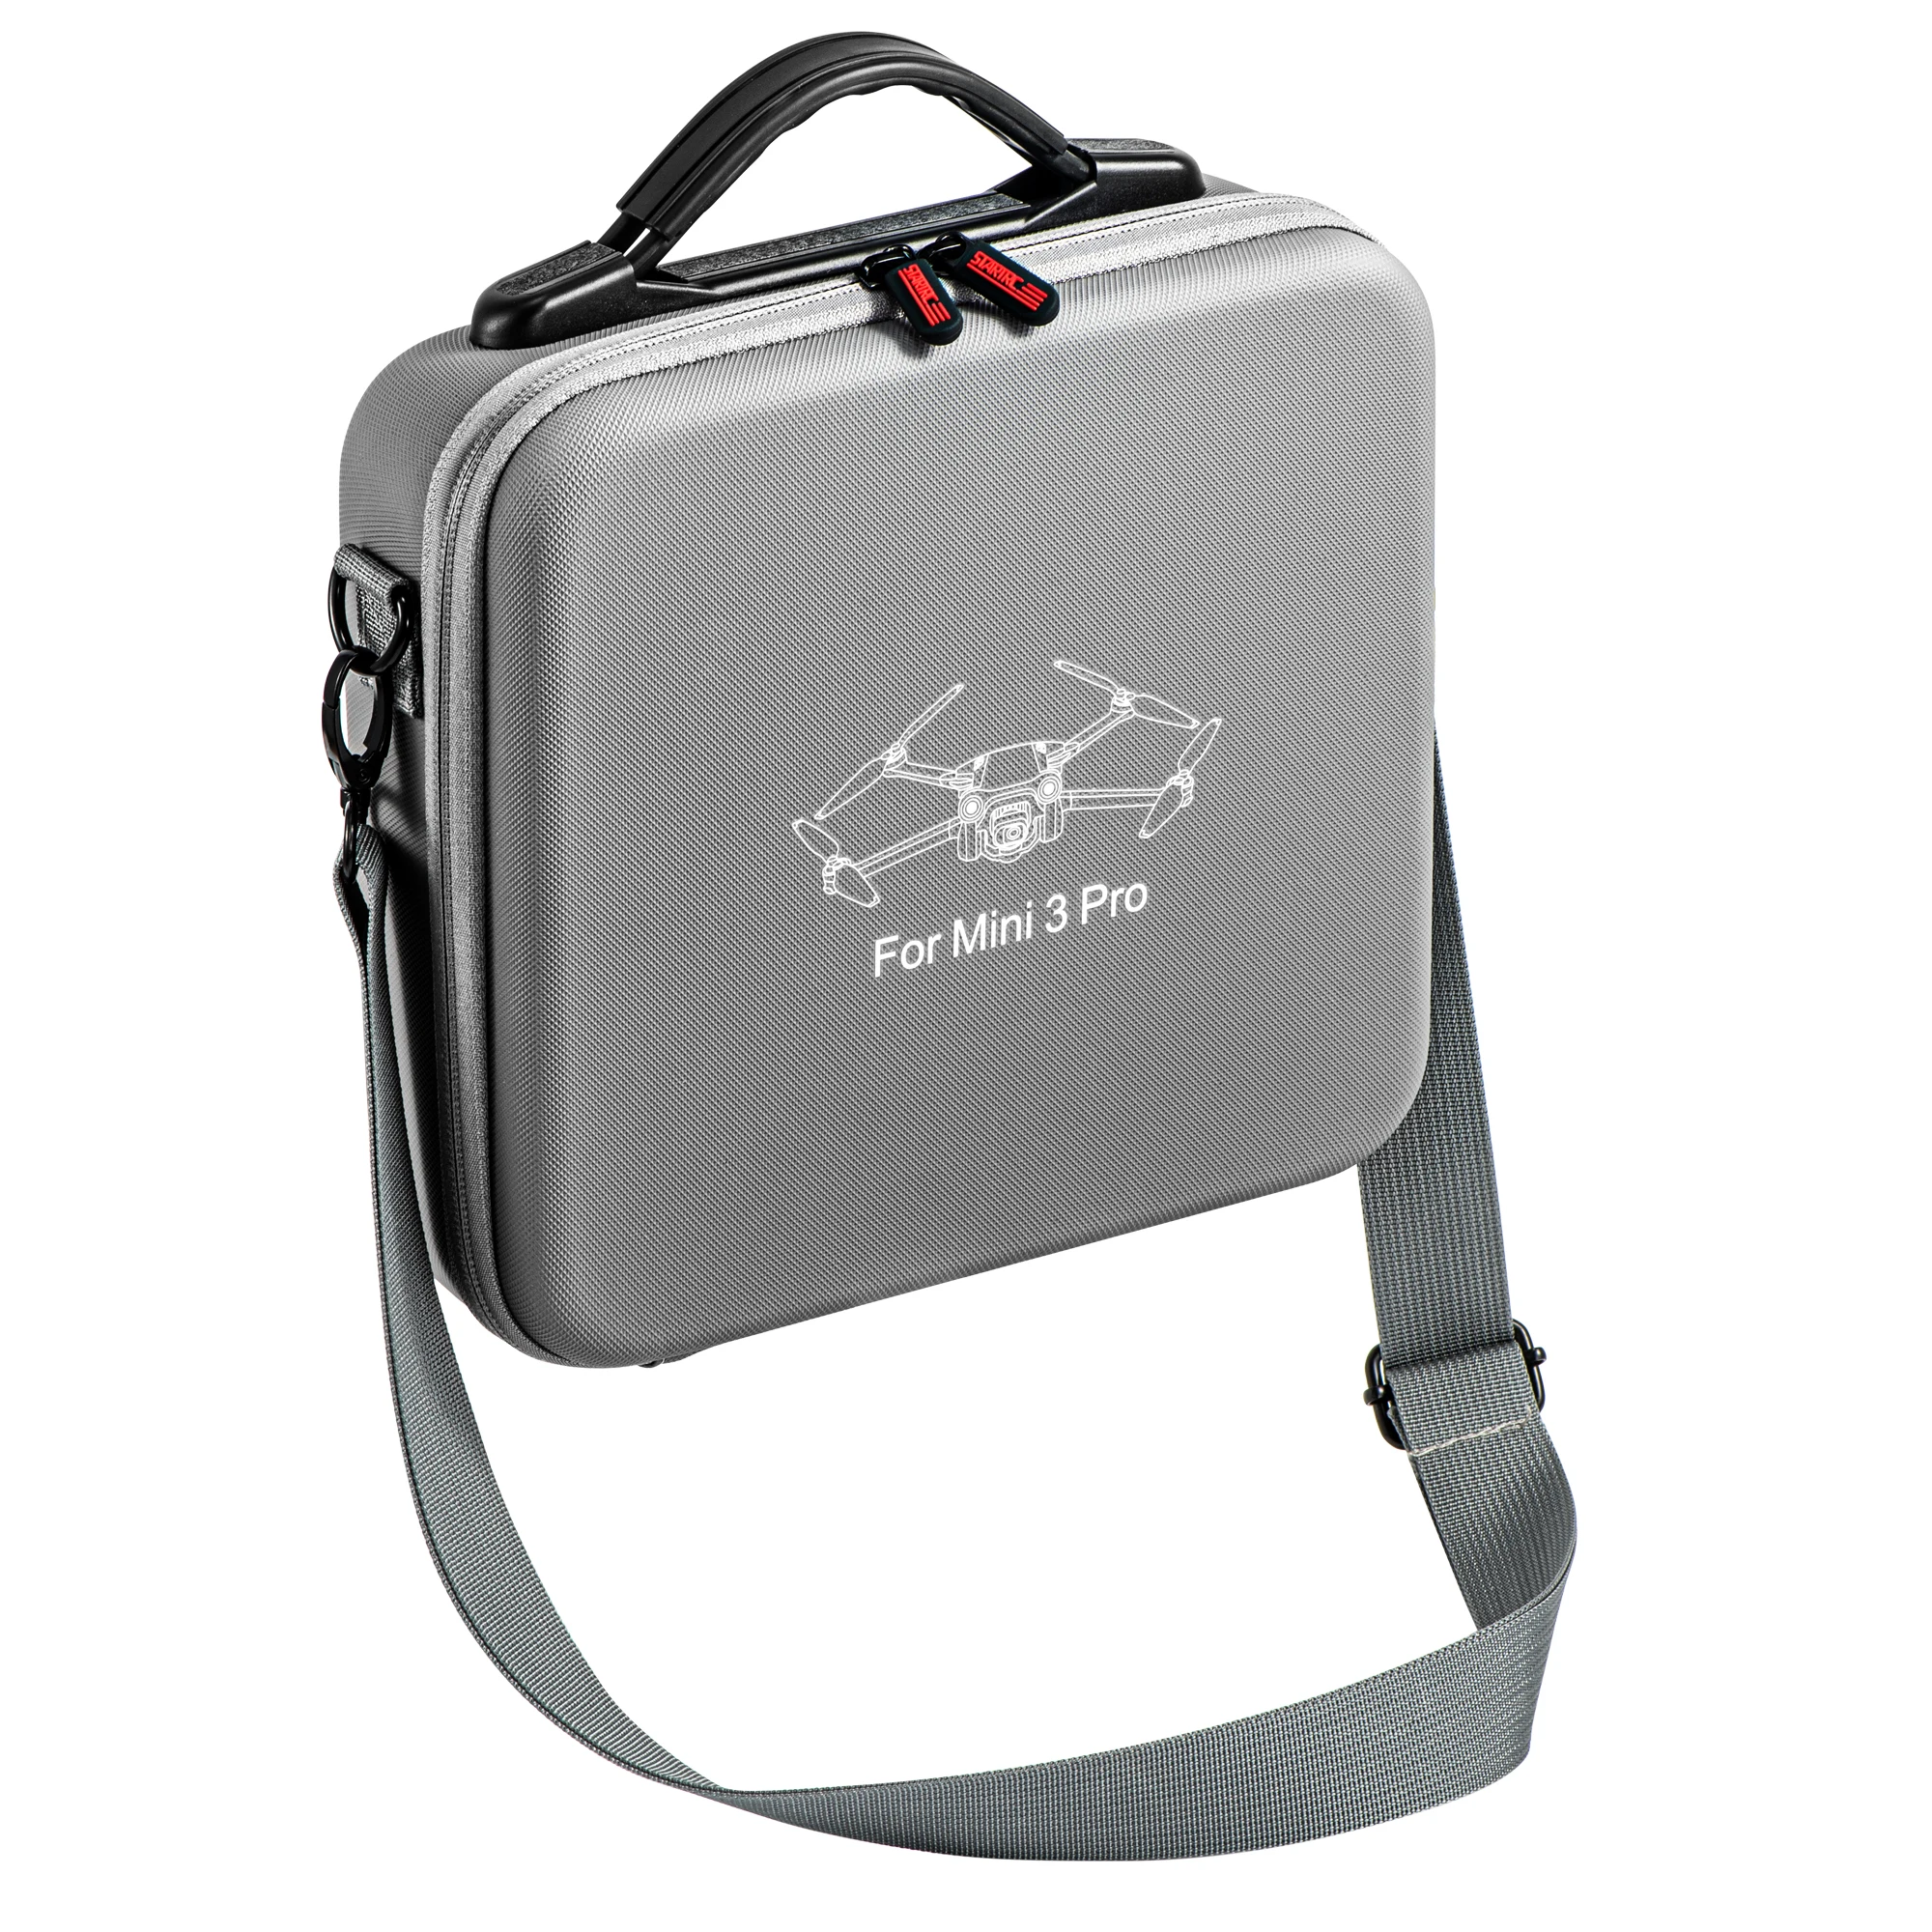 WaterProof Carry Storage Case Shoulder Bag For DJI Mavic Pro Drone Accessories 